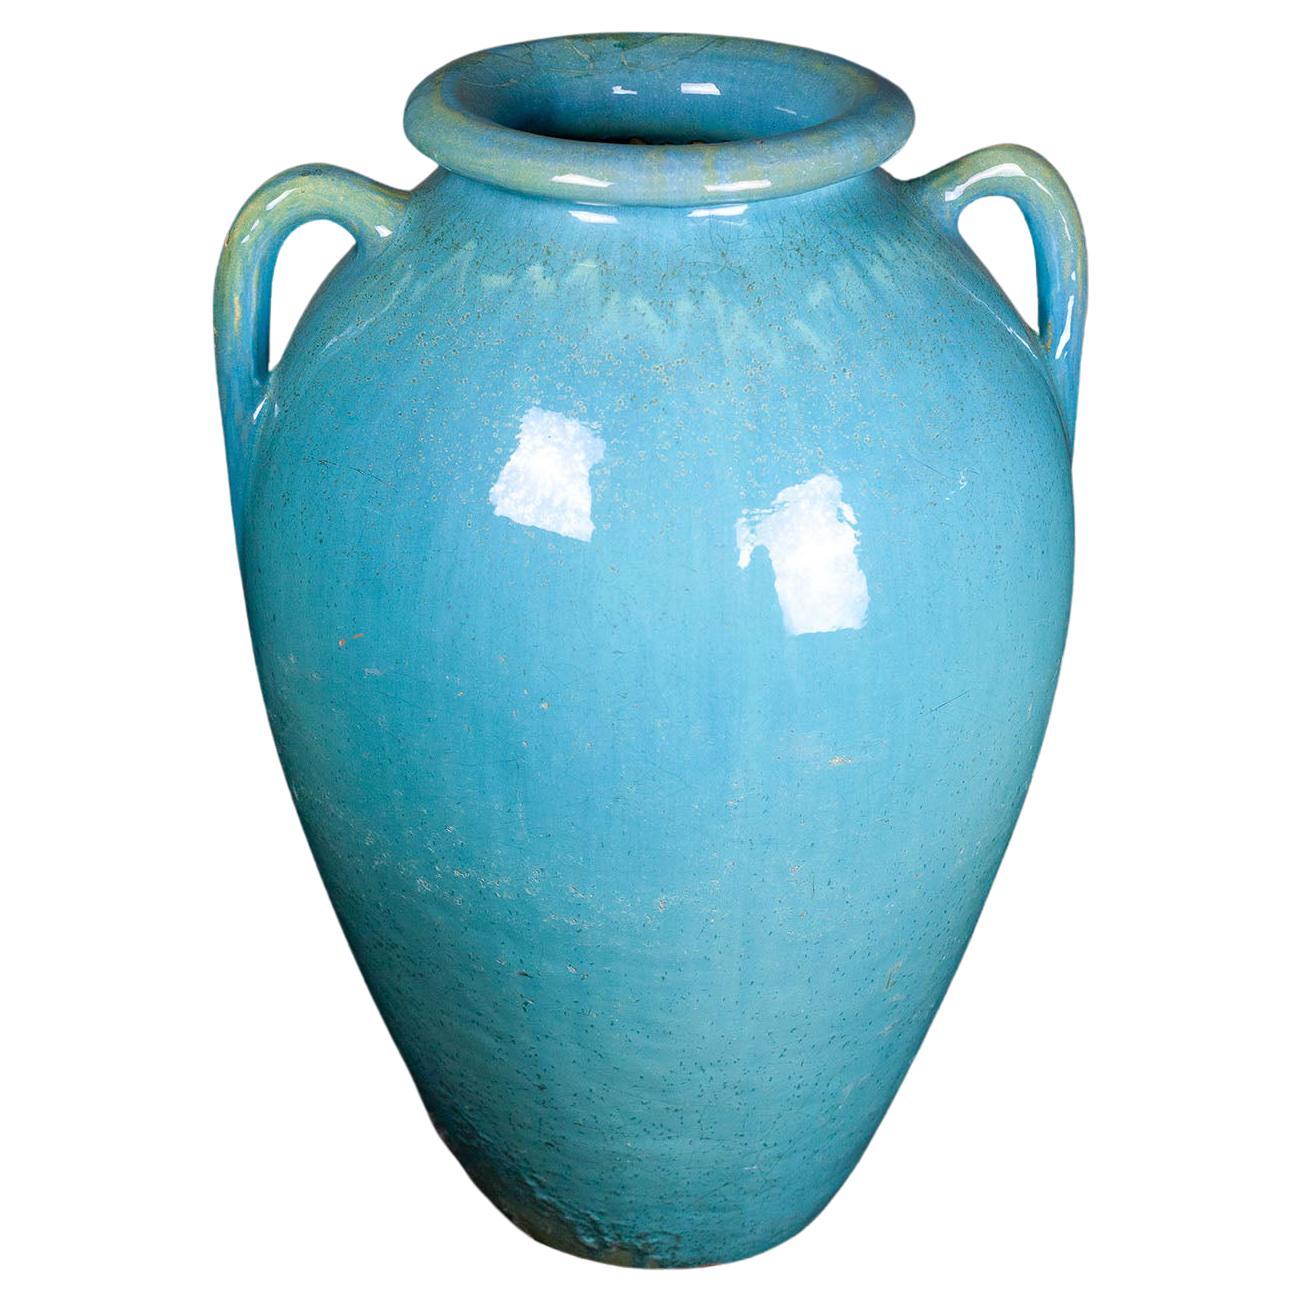 Galloway Garden Urn / Vessel / Pottery 